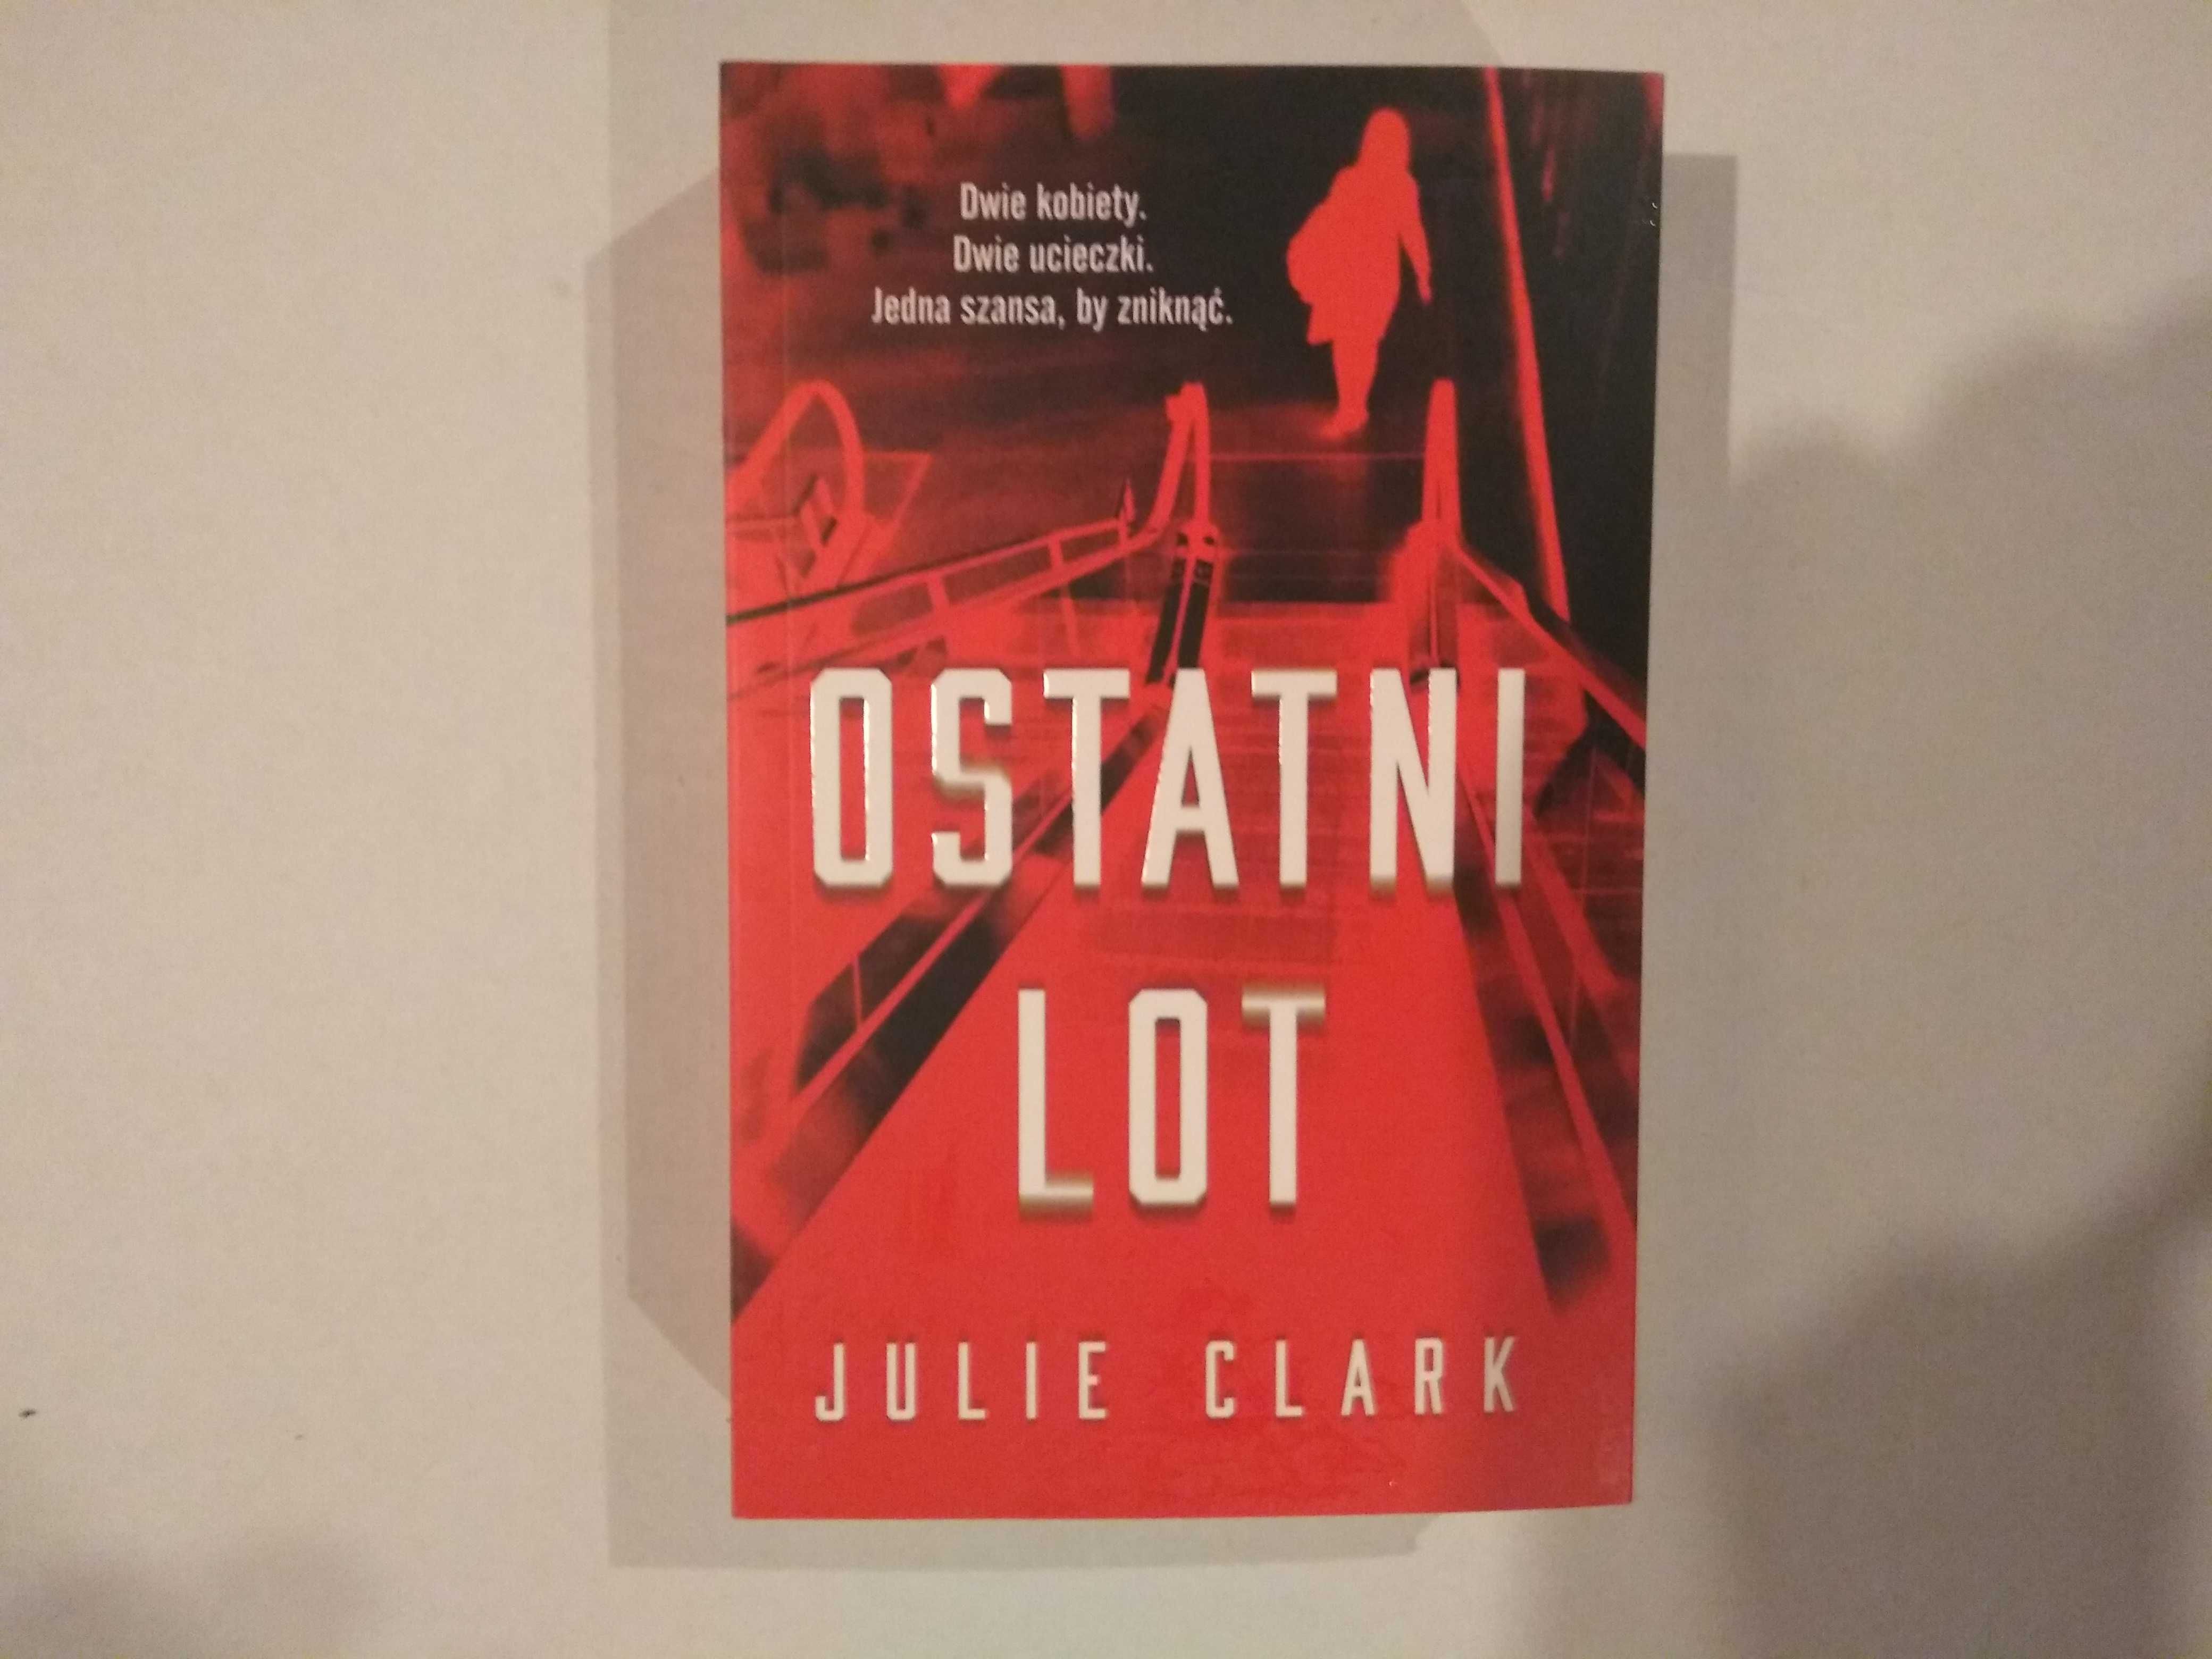 Dobra książka - Ostatni lot Julie Clark (NOWA)